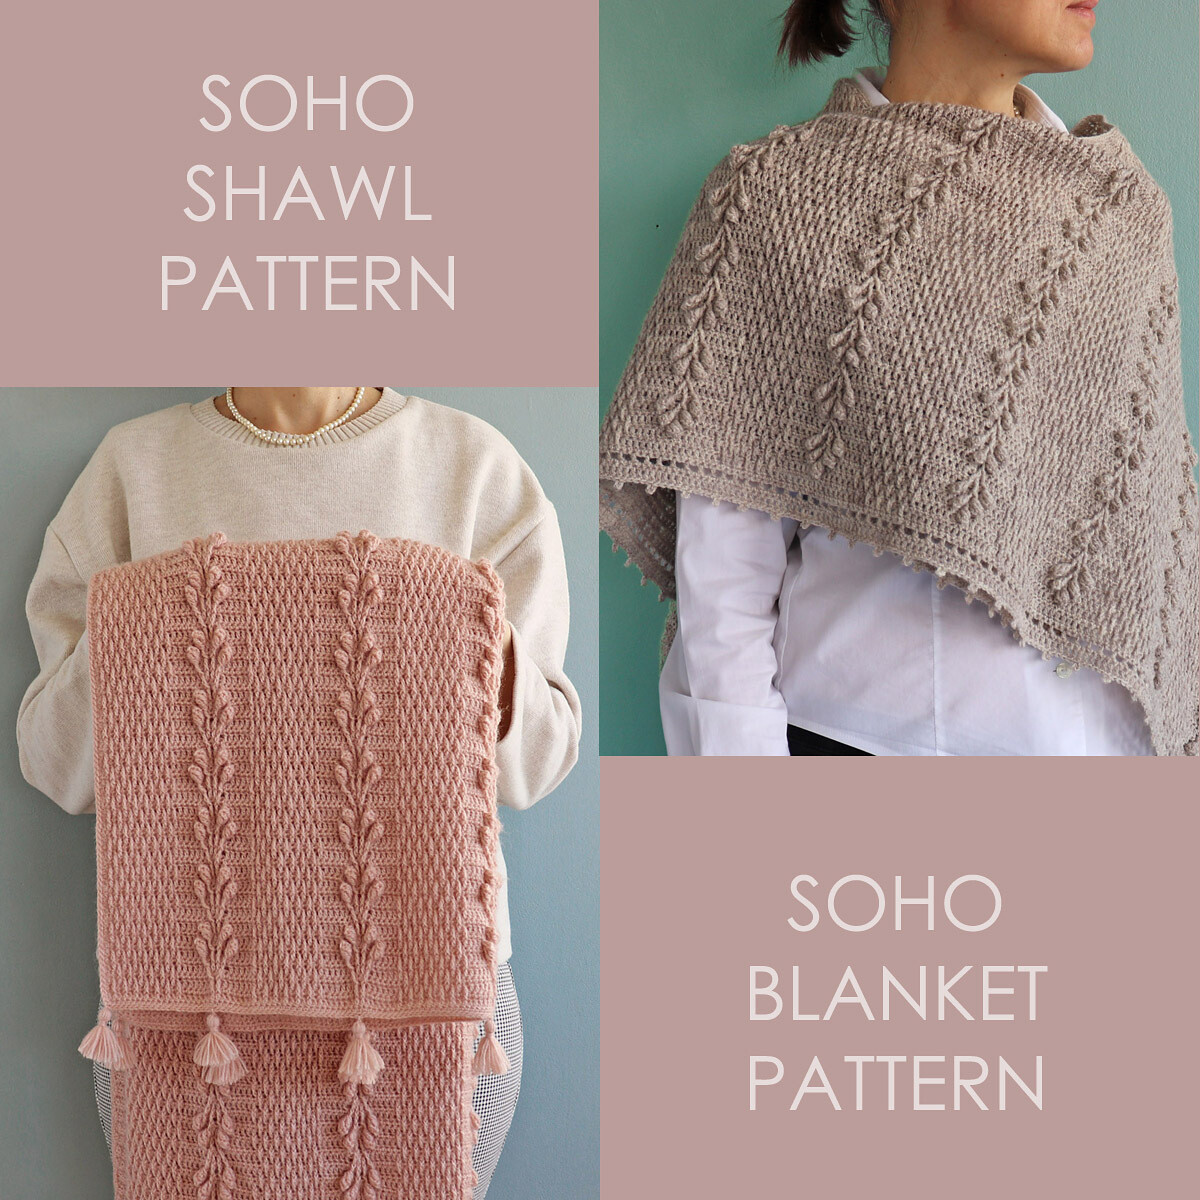 CROCHET PATTERNS: Soho Shawl and Soho Blanket